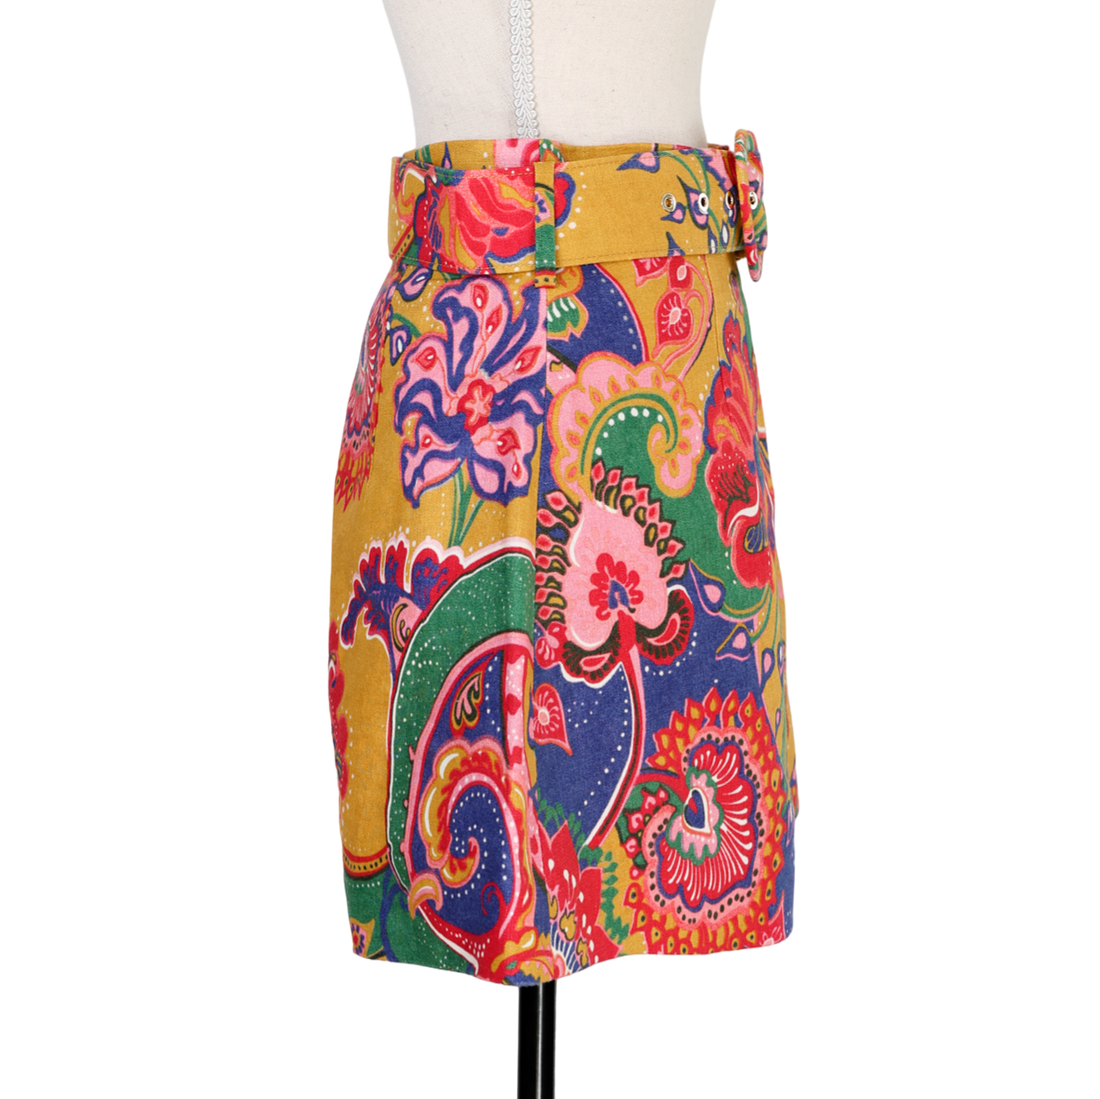 Zimmermann floral print shorts